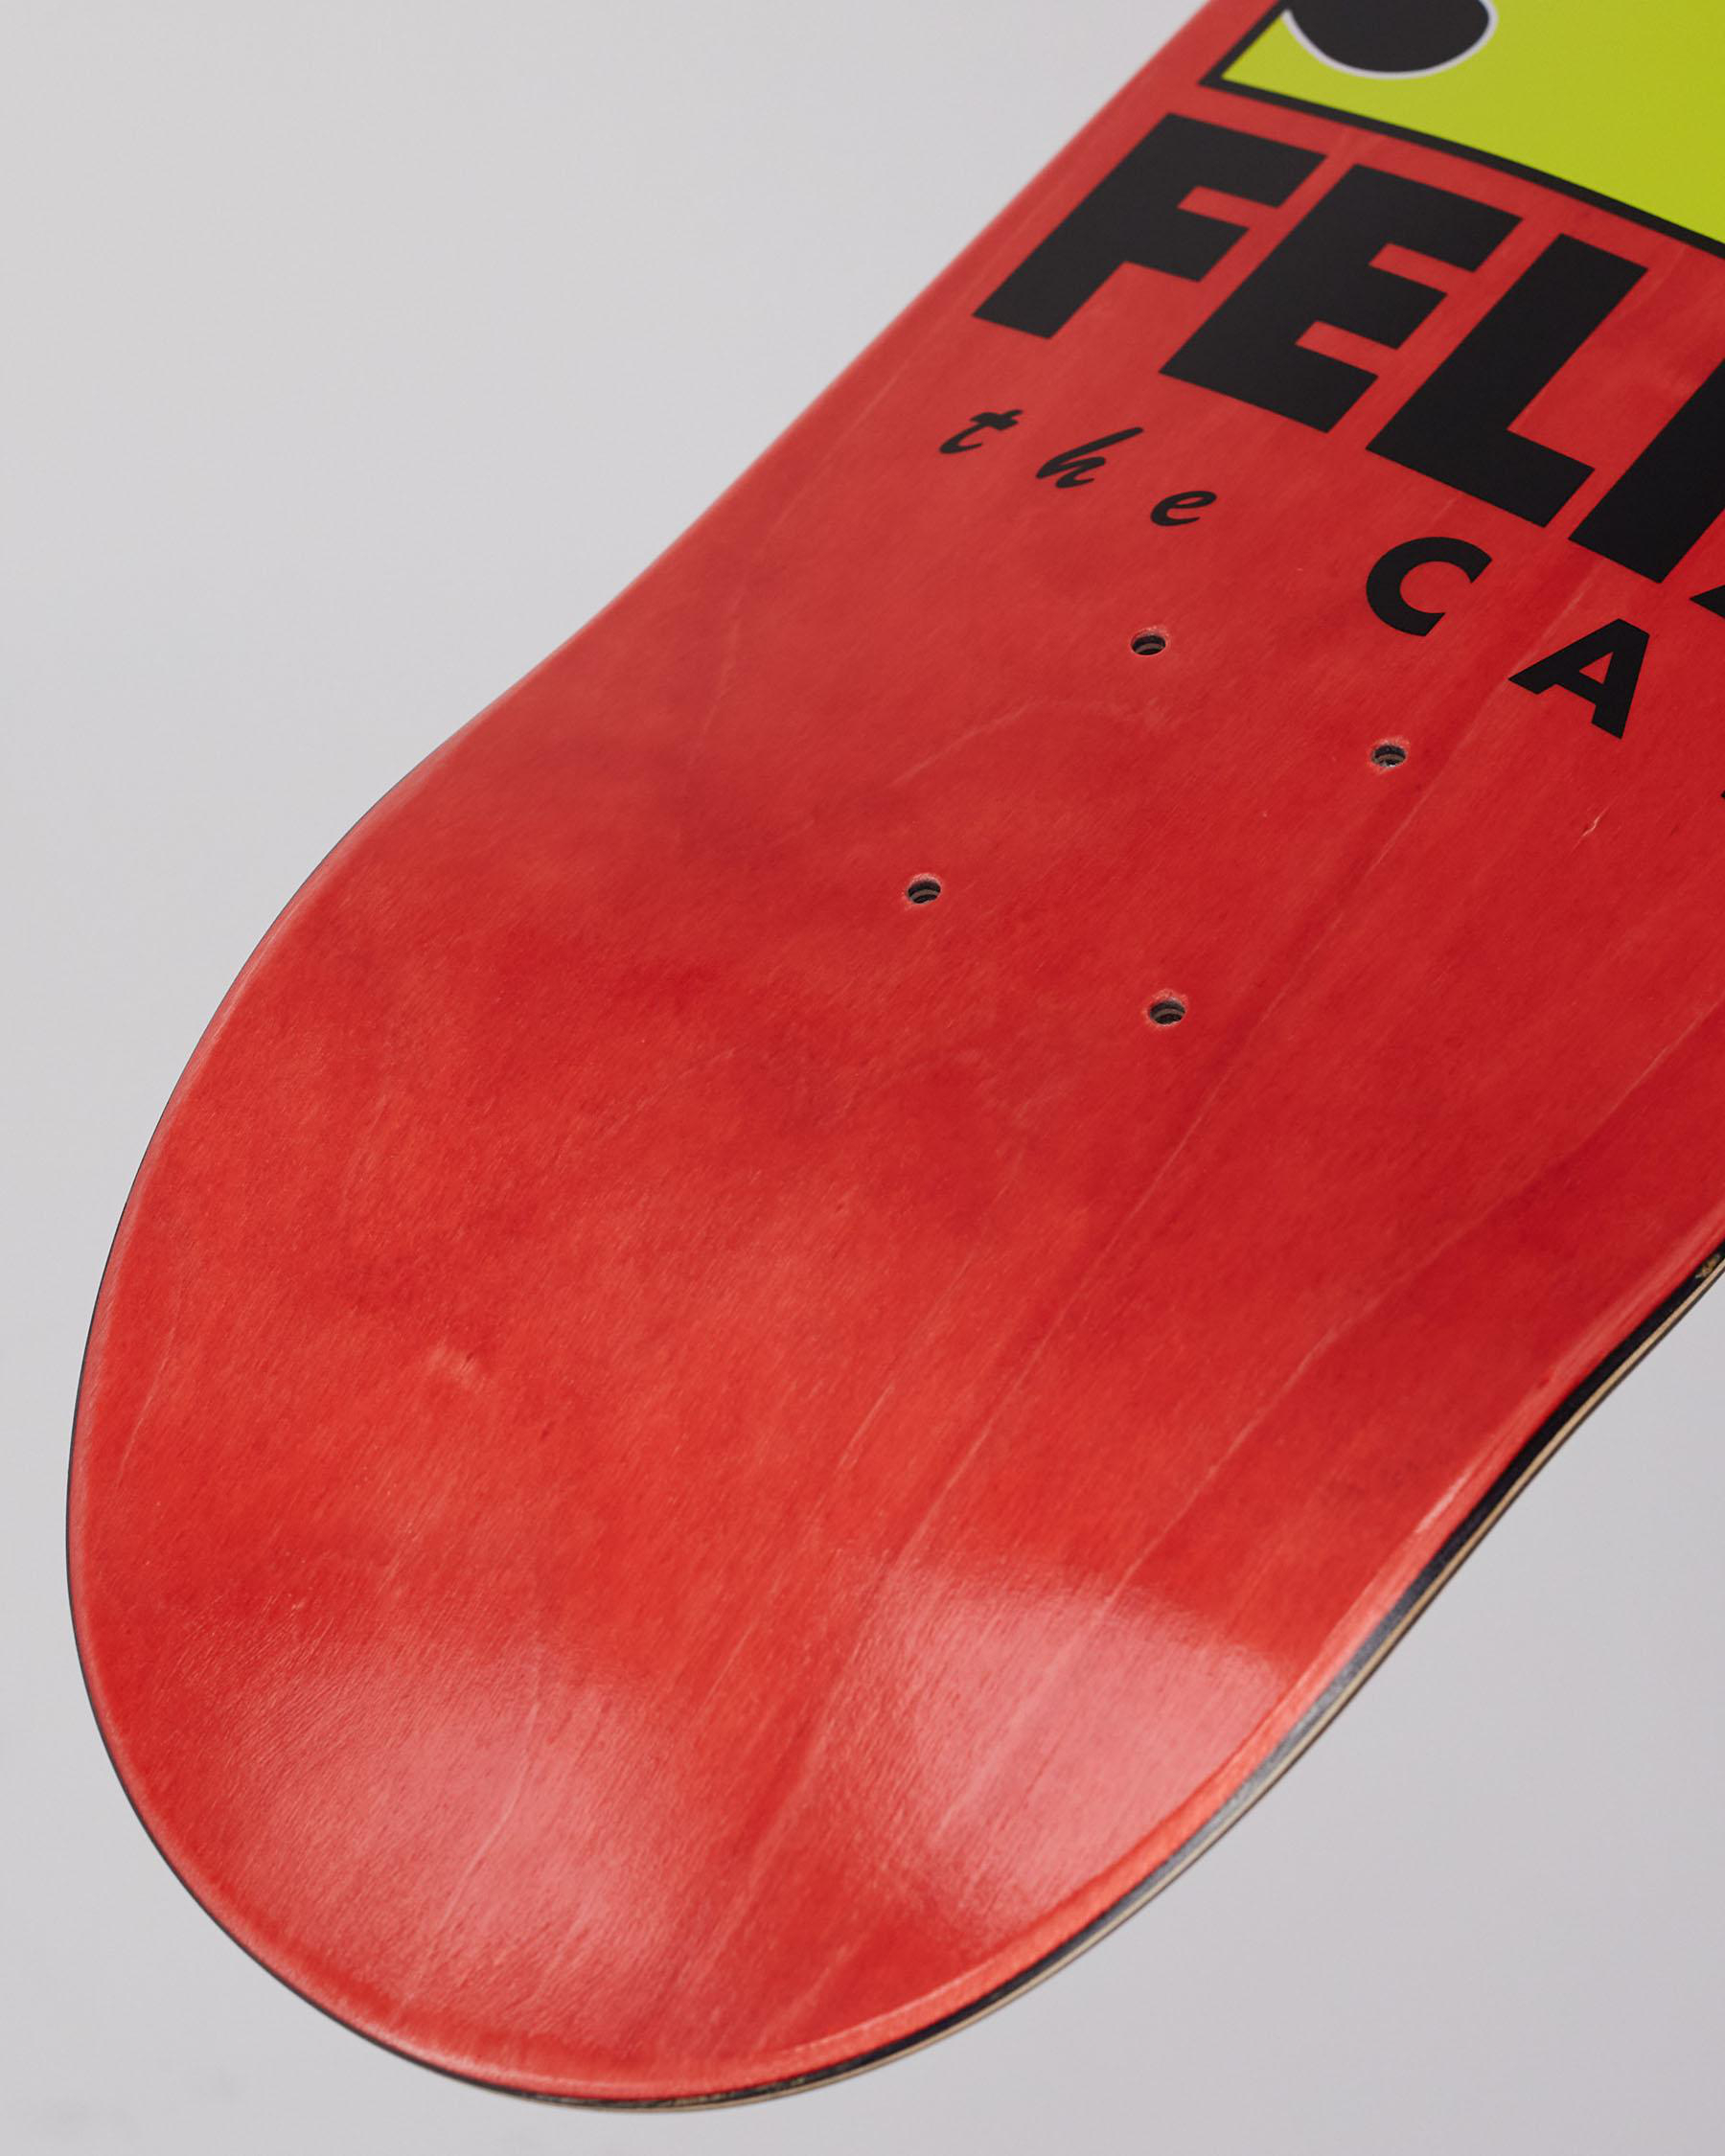 Darkstar Felix Delivery Skateboard Deck Red 8